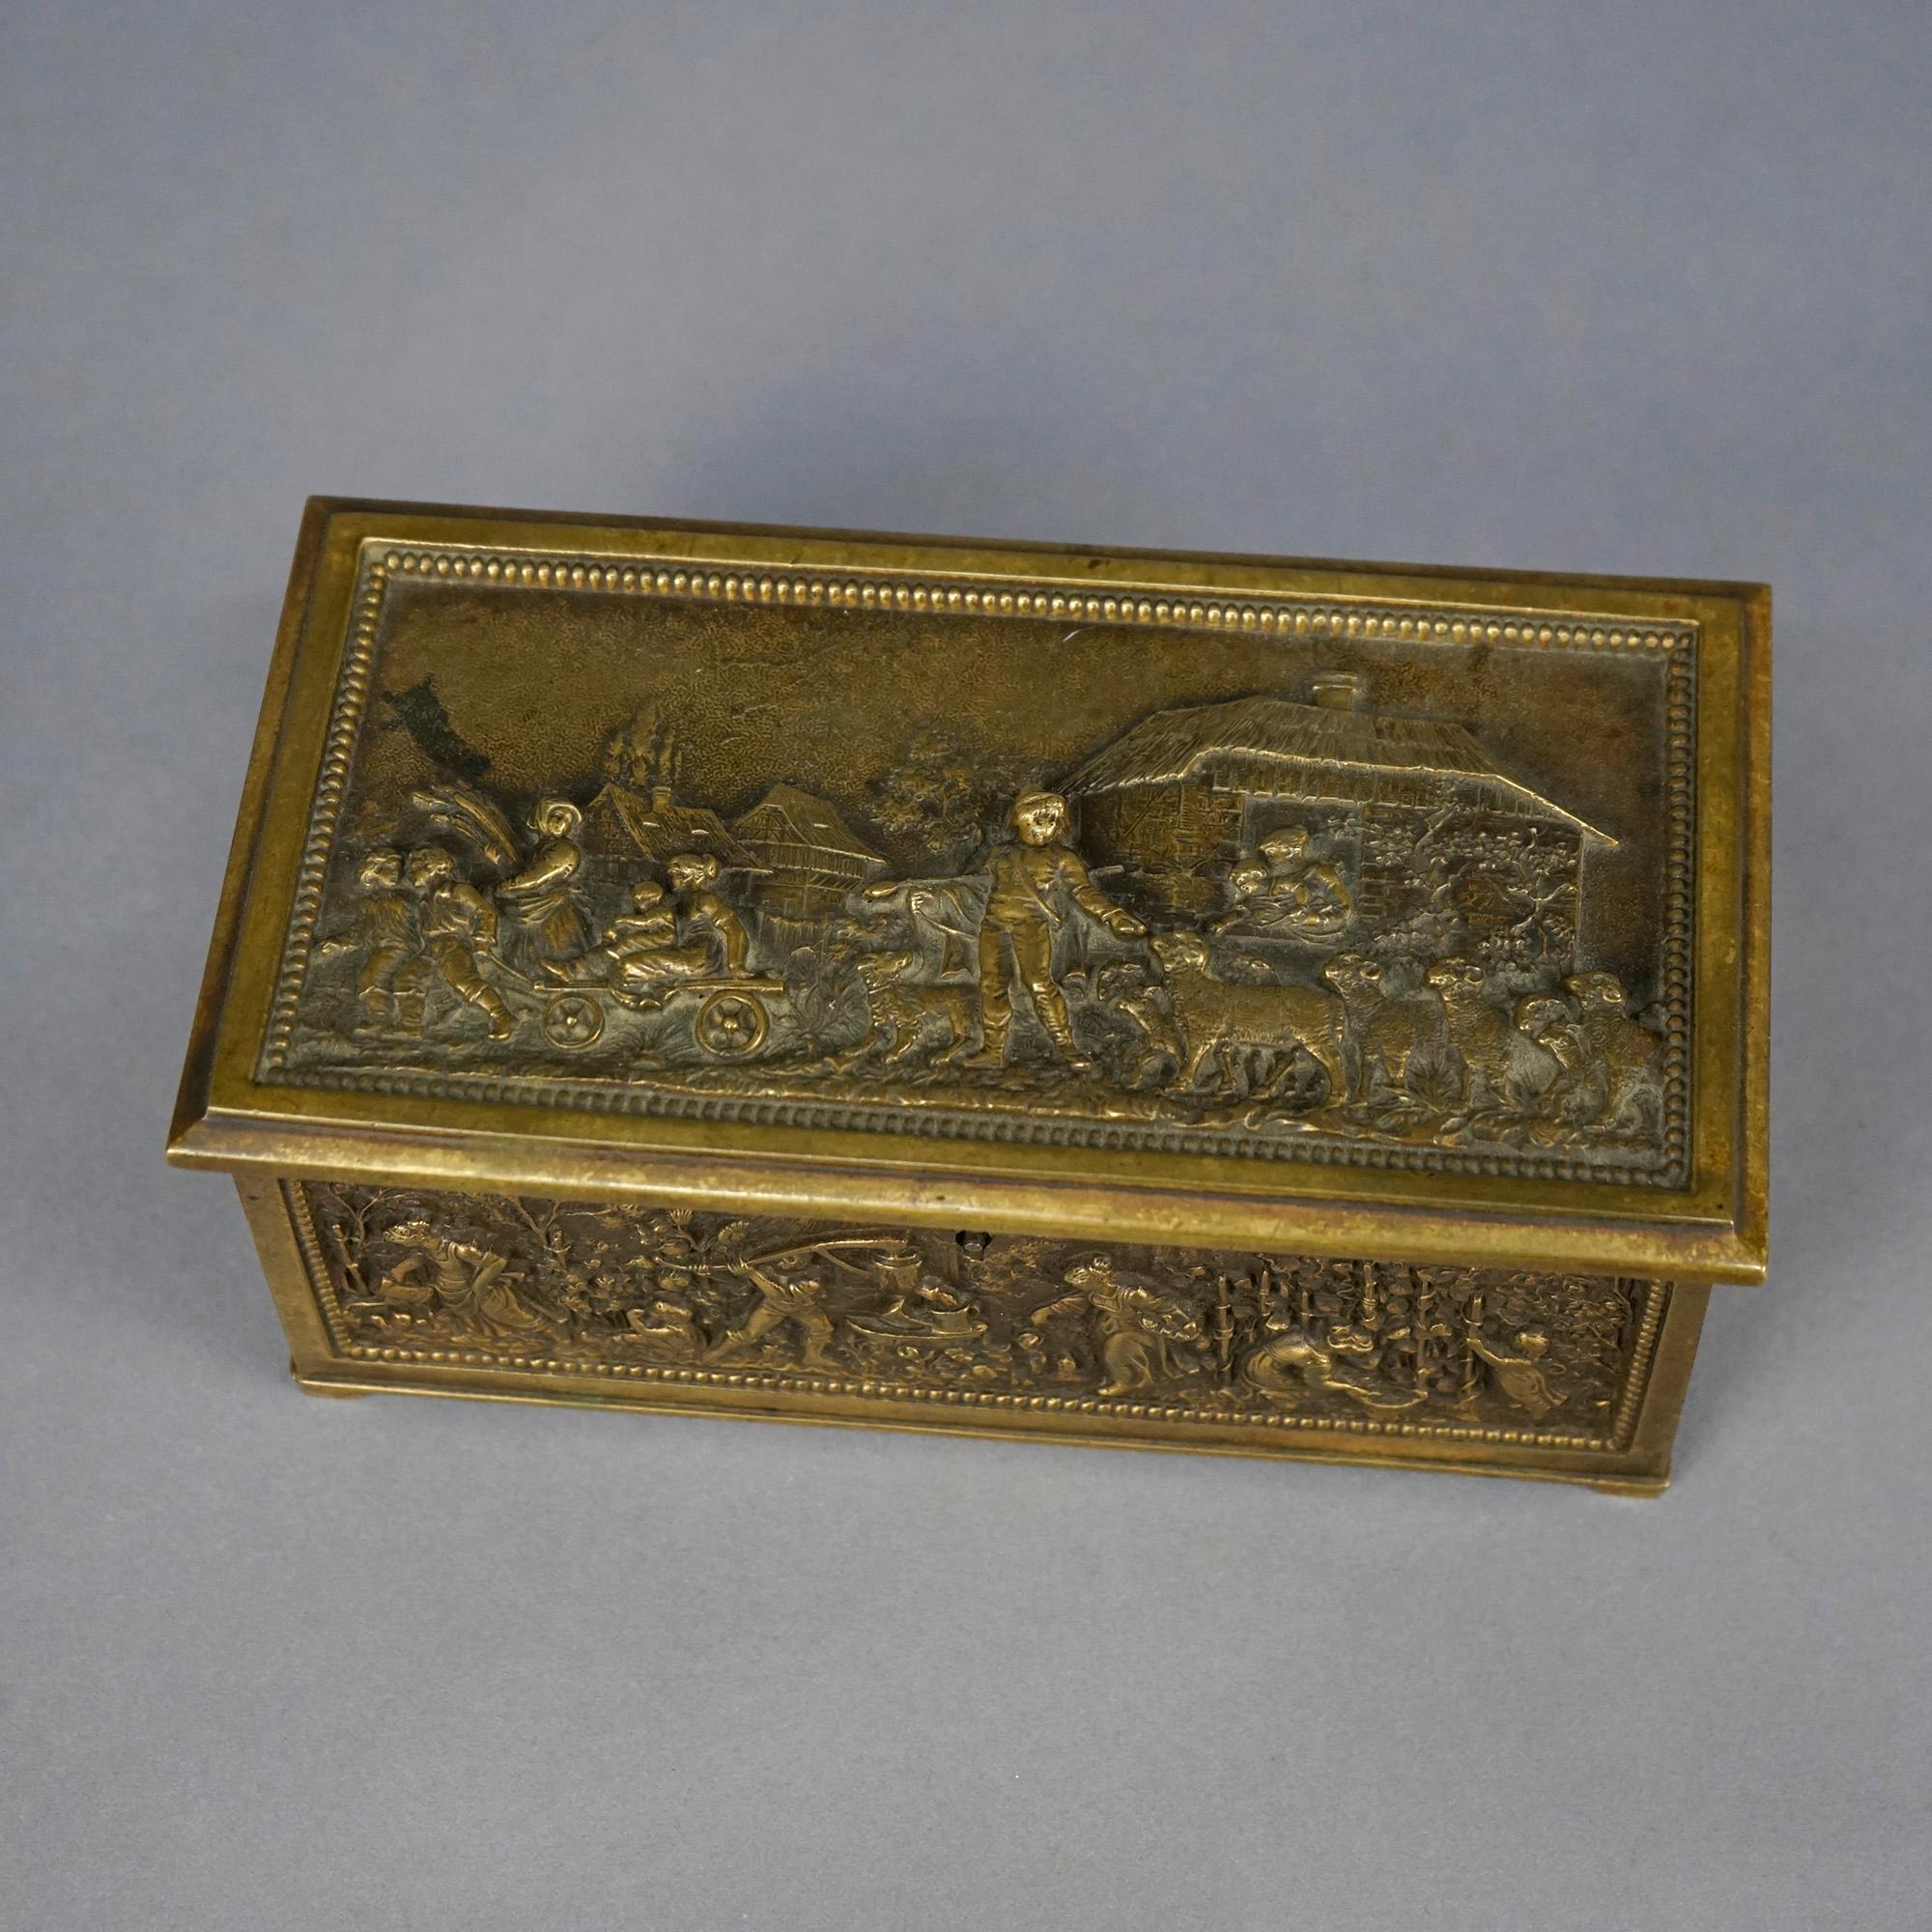 European Antique Bronze Box, Continental Genre Scene with Figures in High Relief 19th C